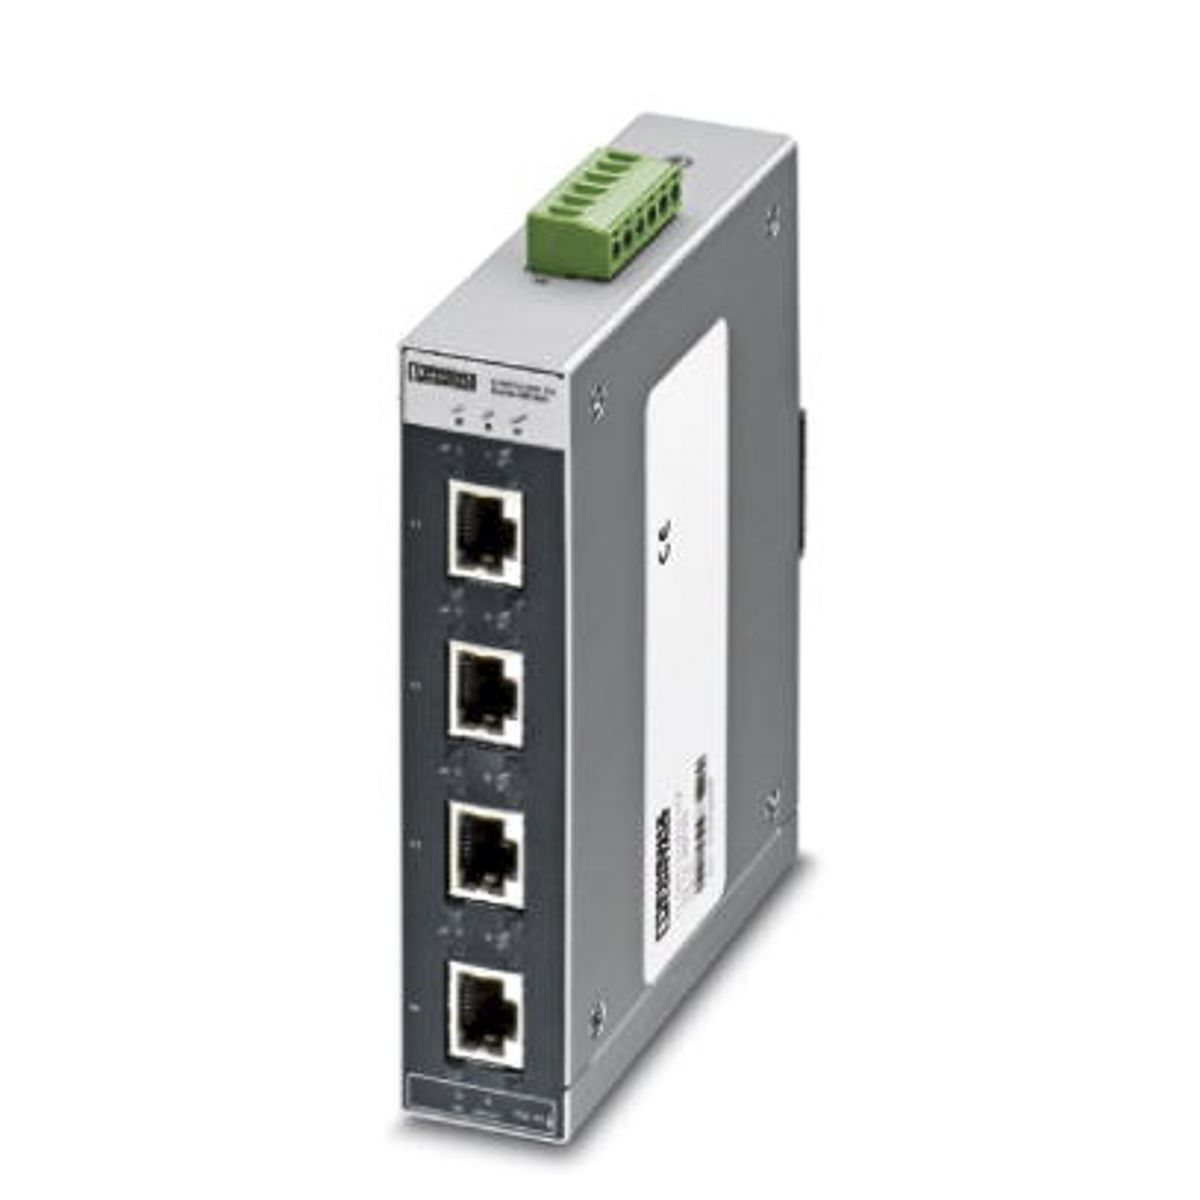 Phoenix ContactFL SWITCH SFNT 5TX Series DIN Rail Mount Ethernet Switch, 5 RJ45 Ports, 100Mbit/s Transmission, 24V dc